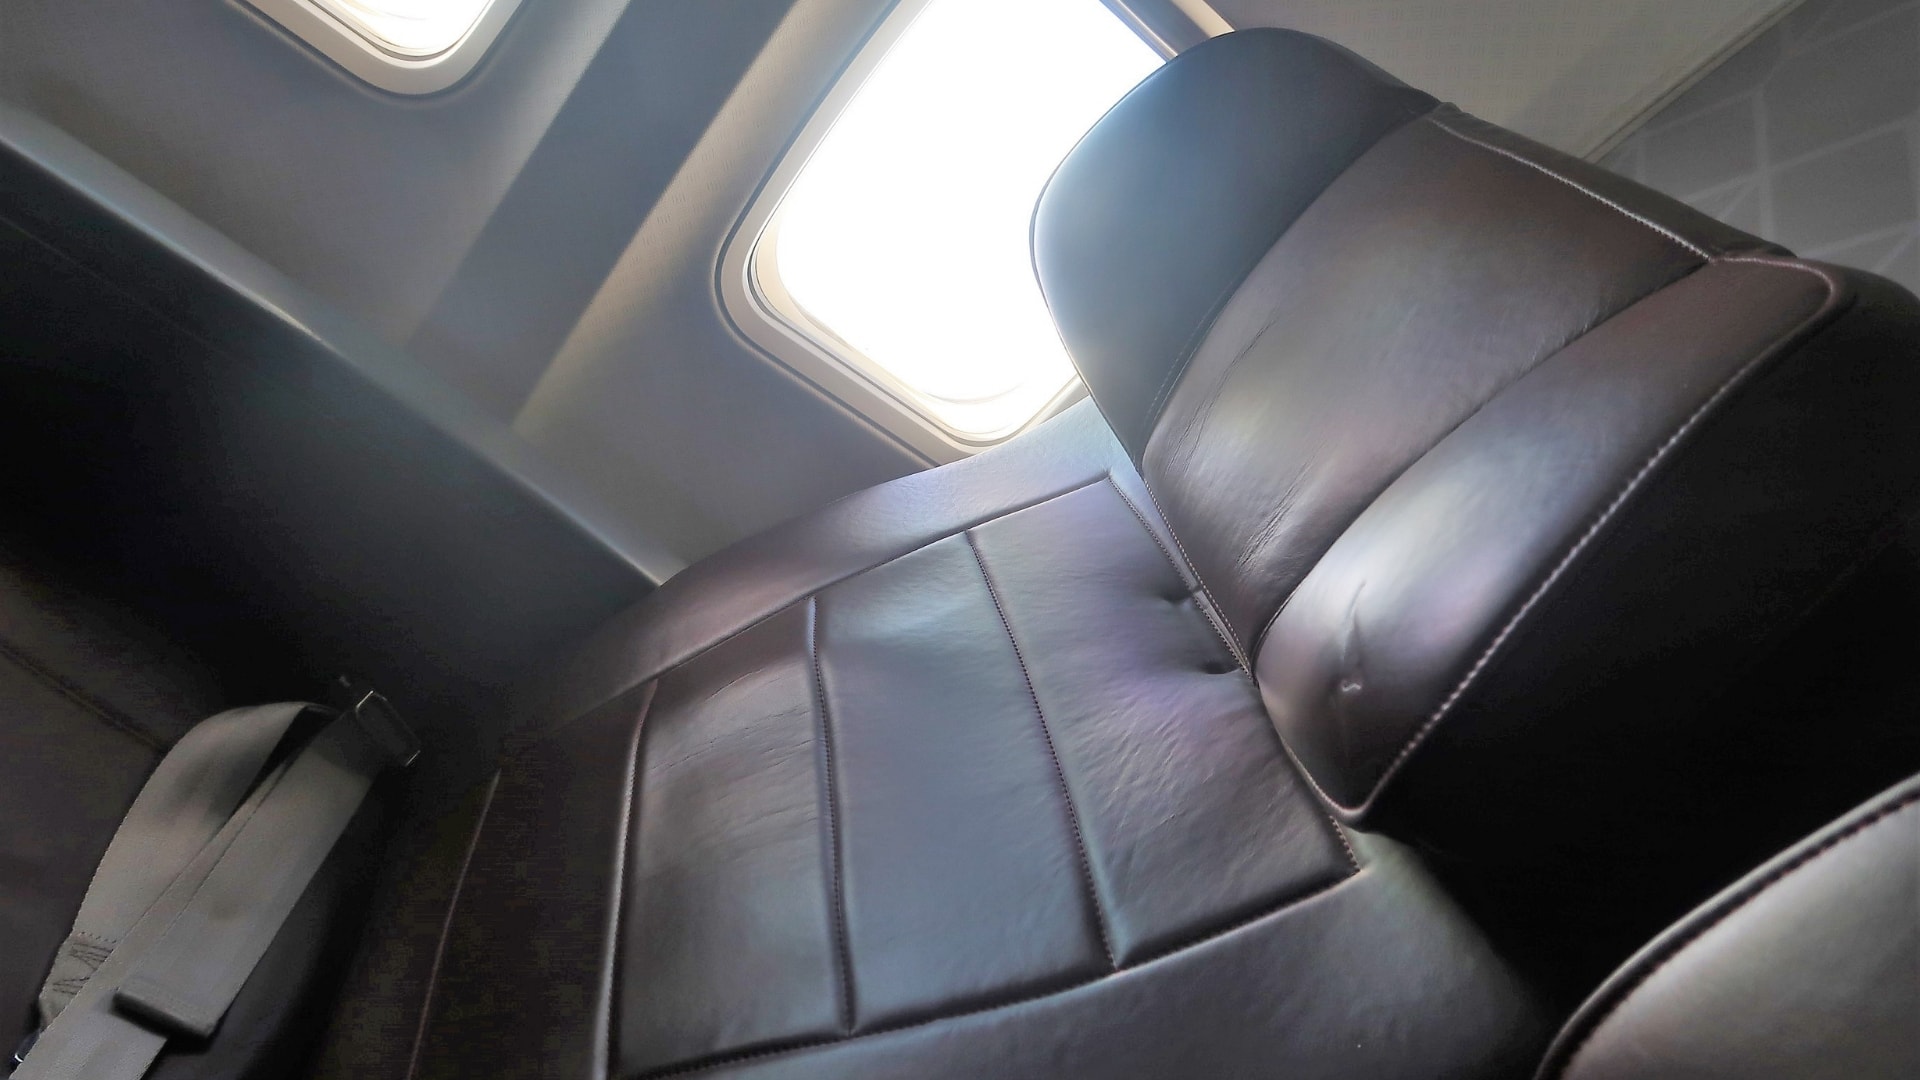 qantas 737 domestic business class seat angled